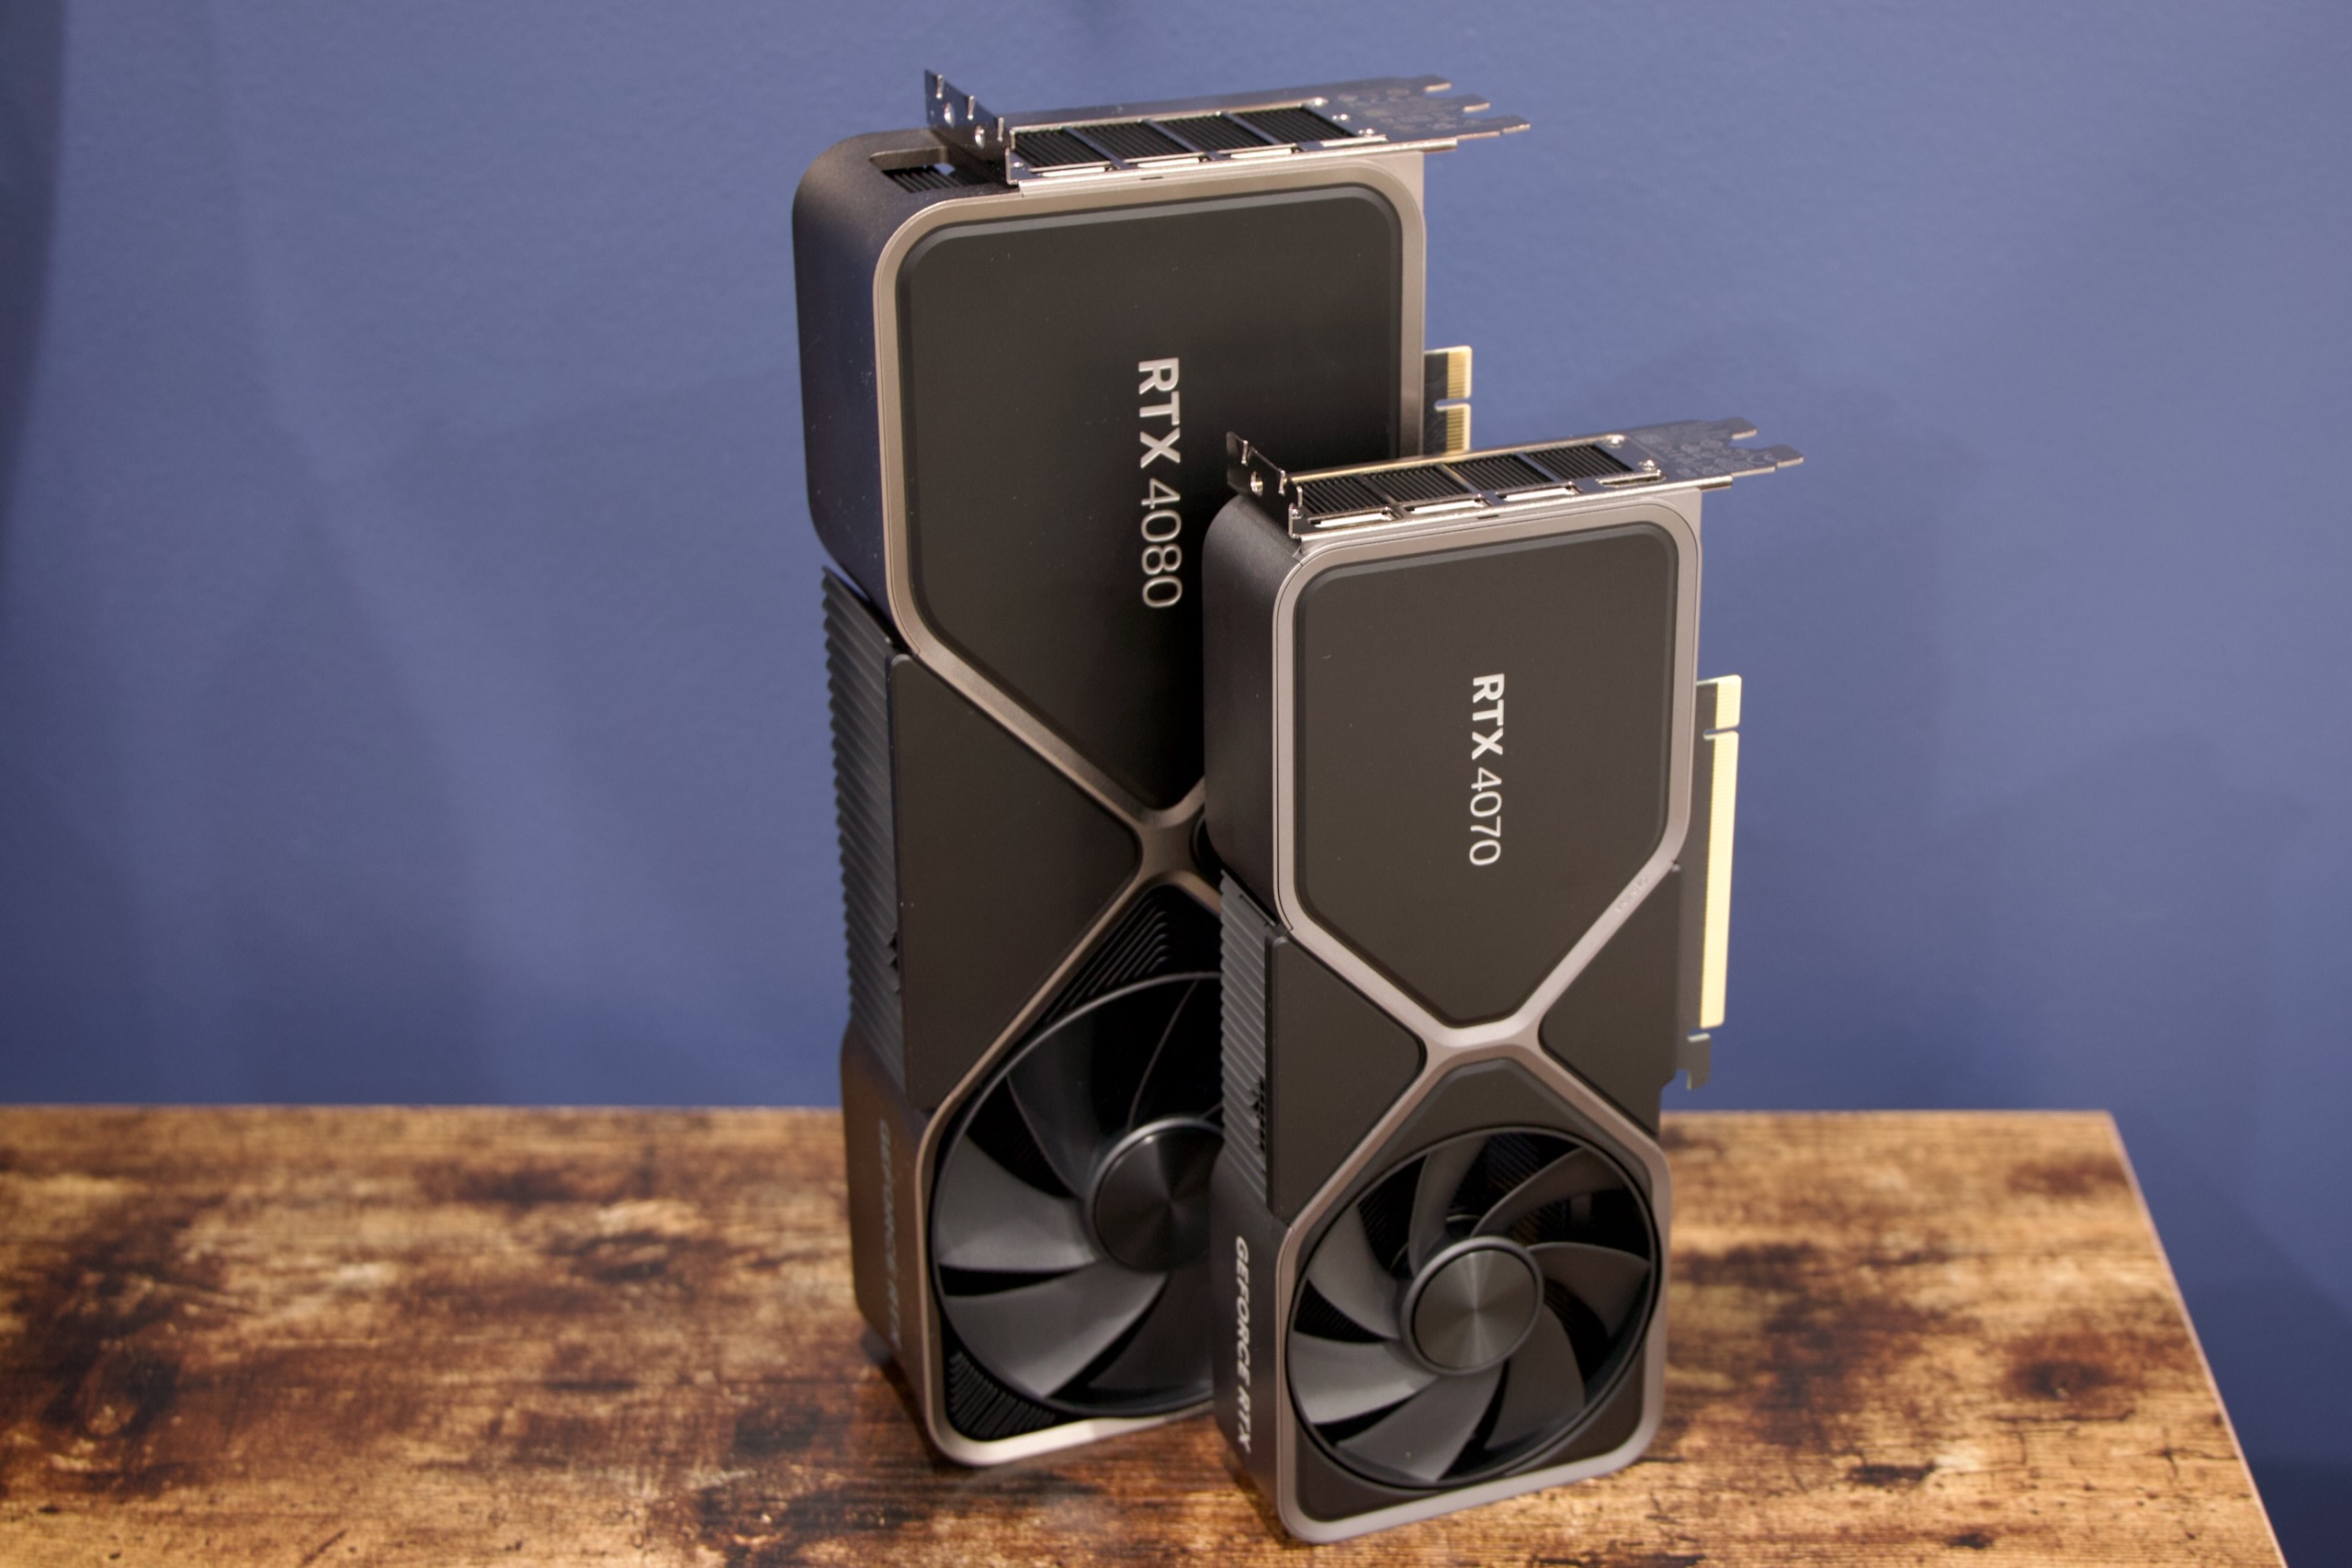 Group test: Nvidia GeForce RTX 40 Series GPUs